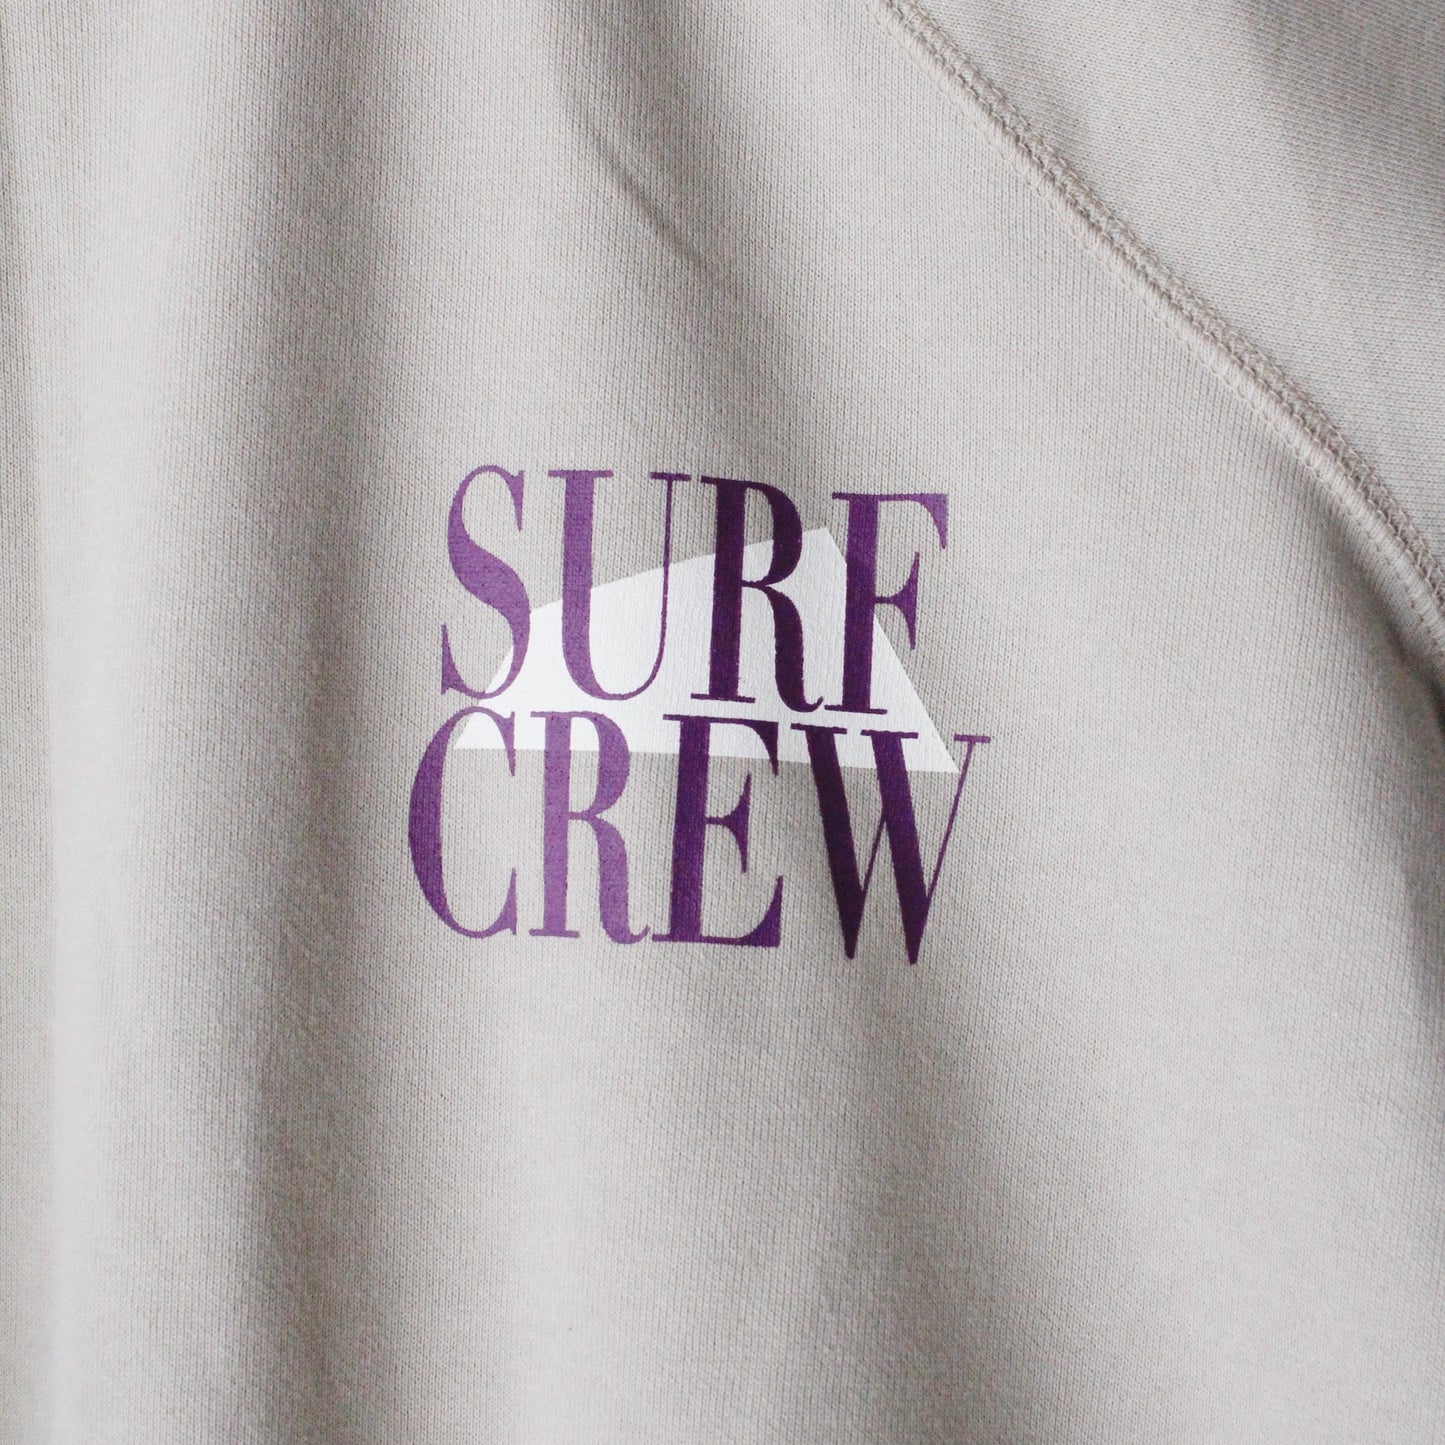 French Terry Crew neck (Surf Crew)